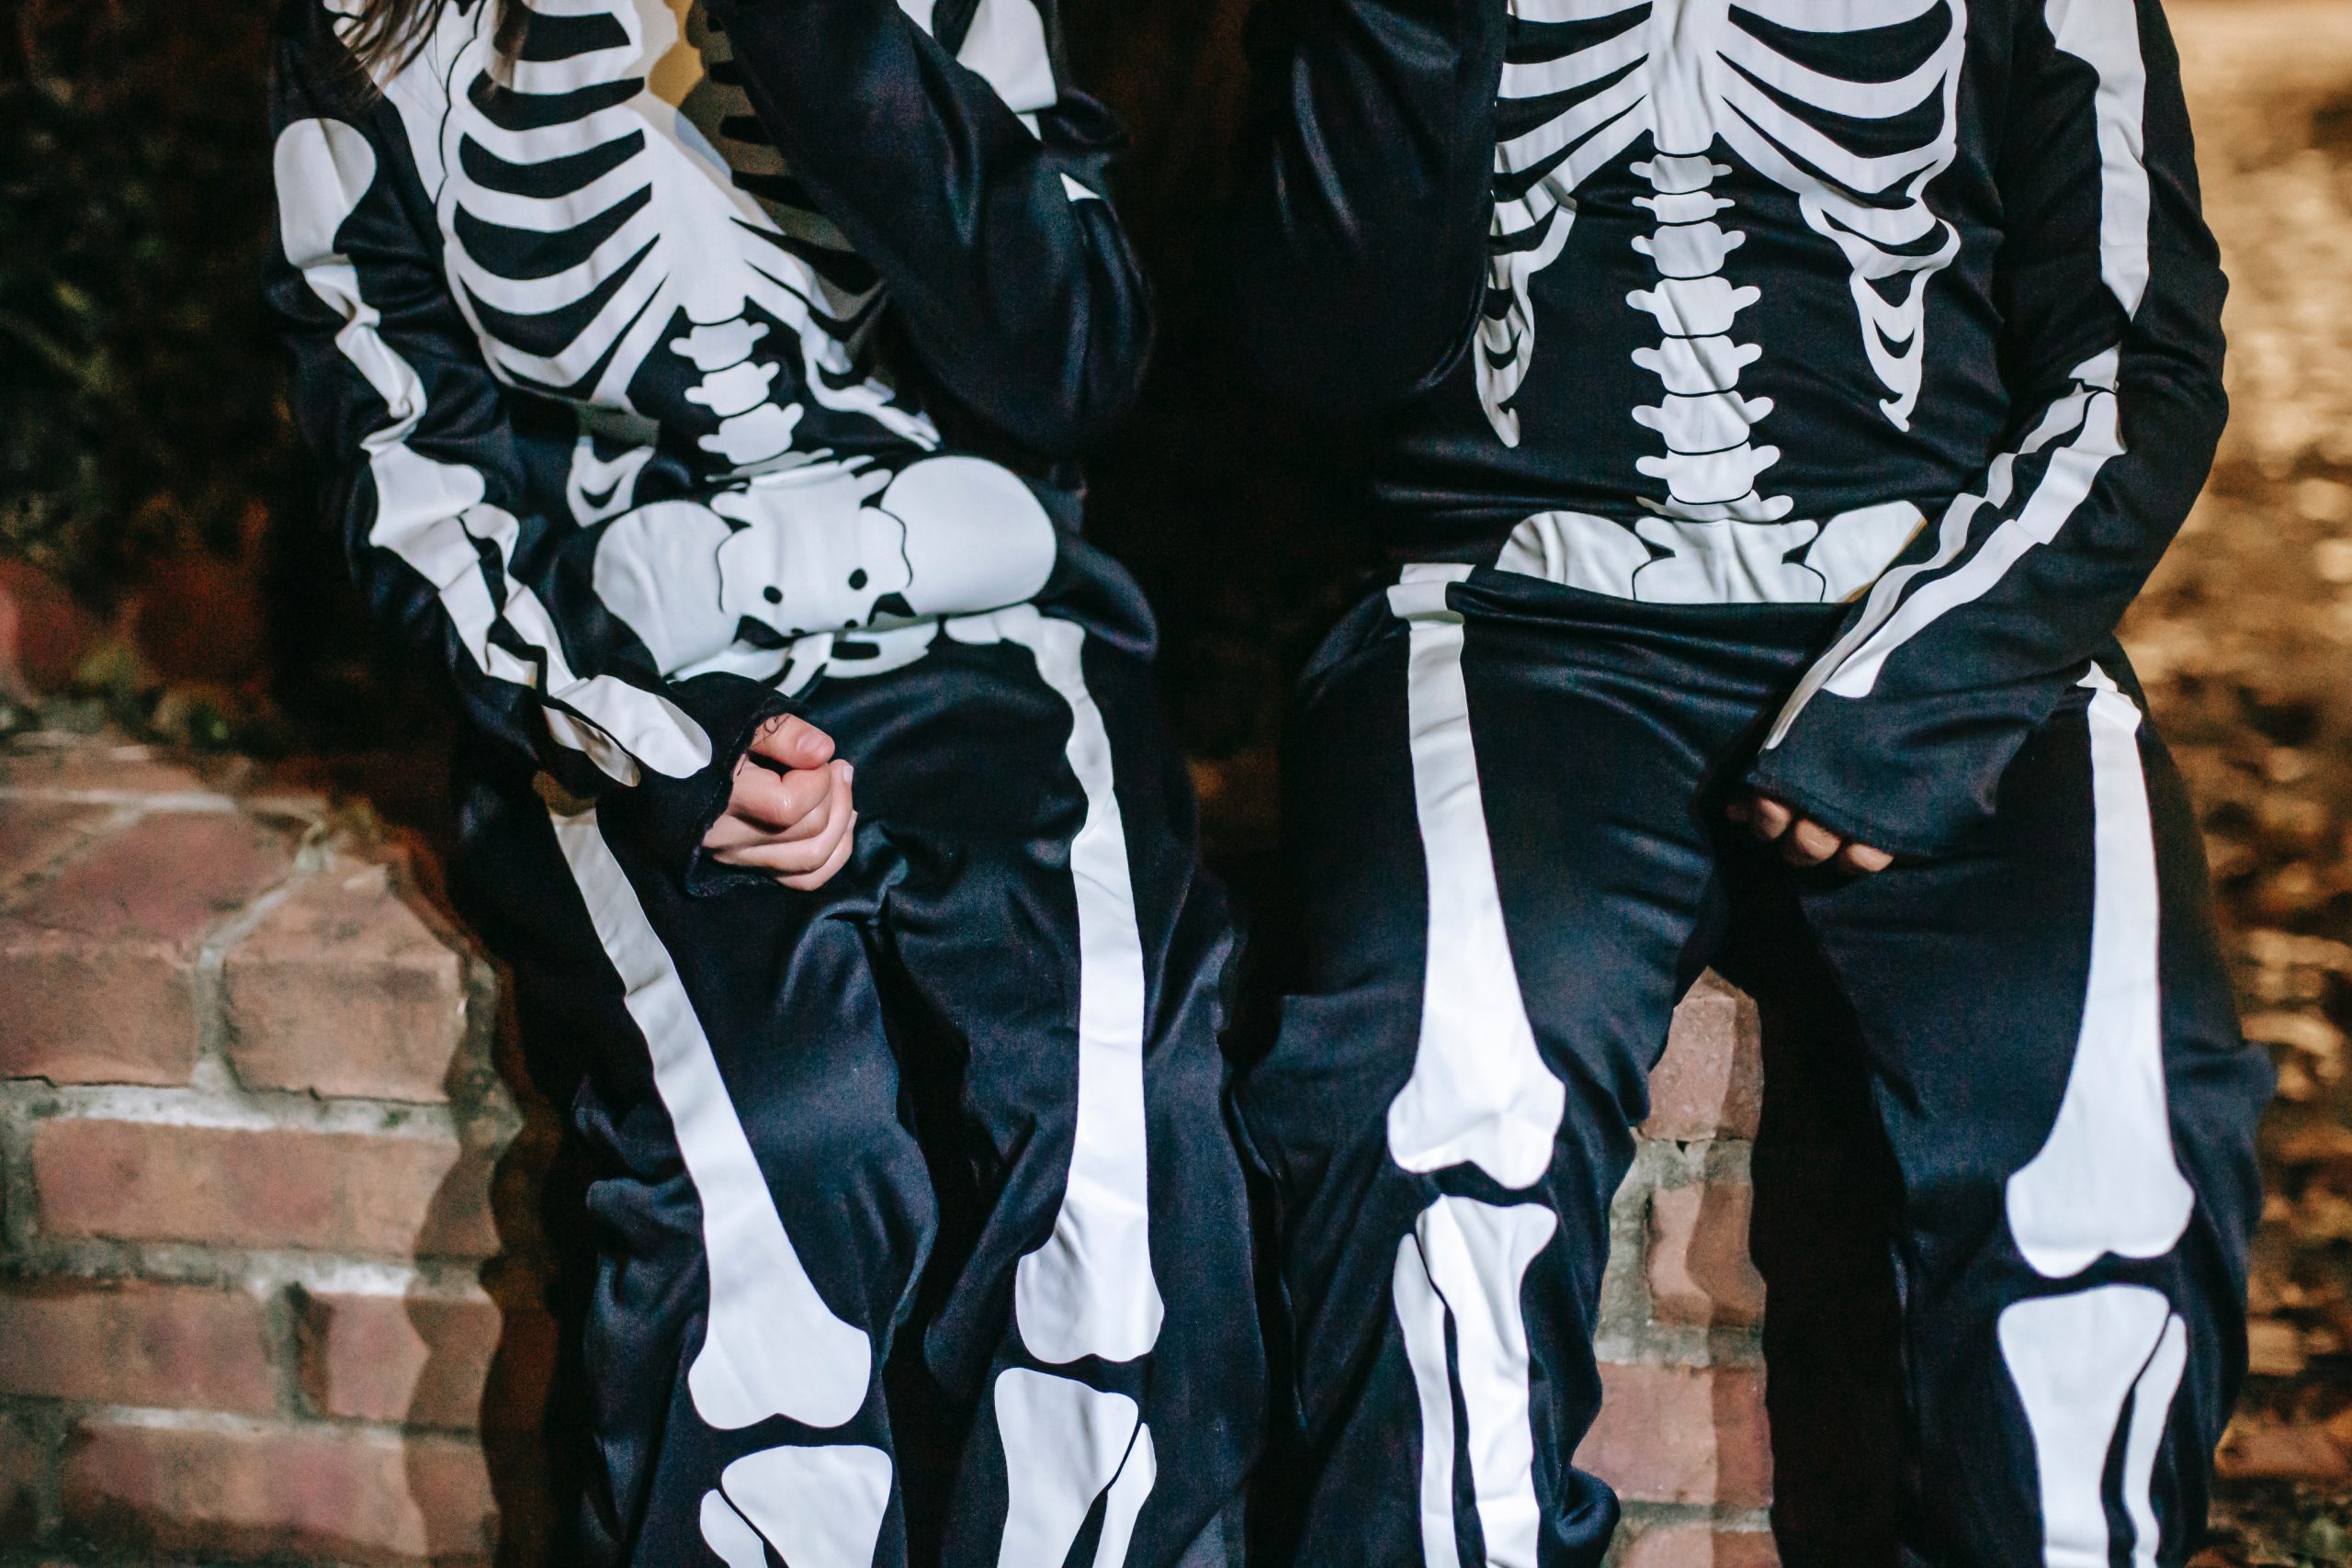 Two children in skeleton costumes